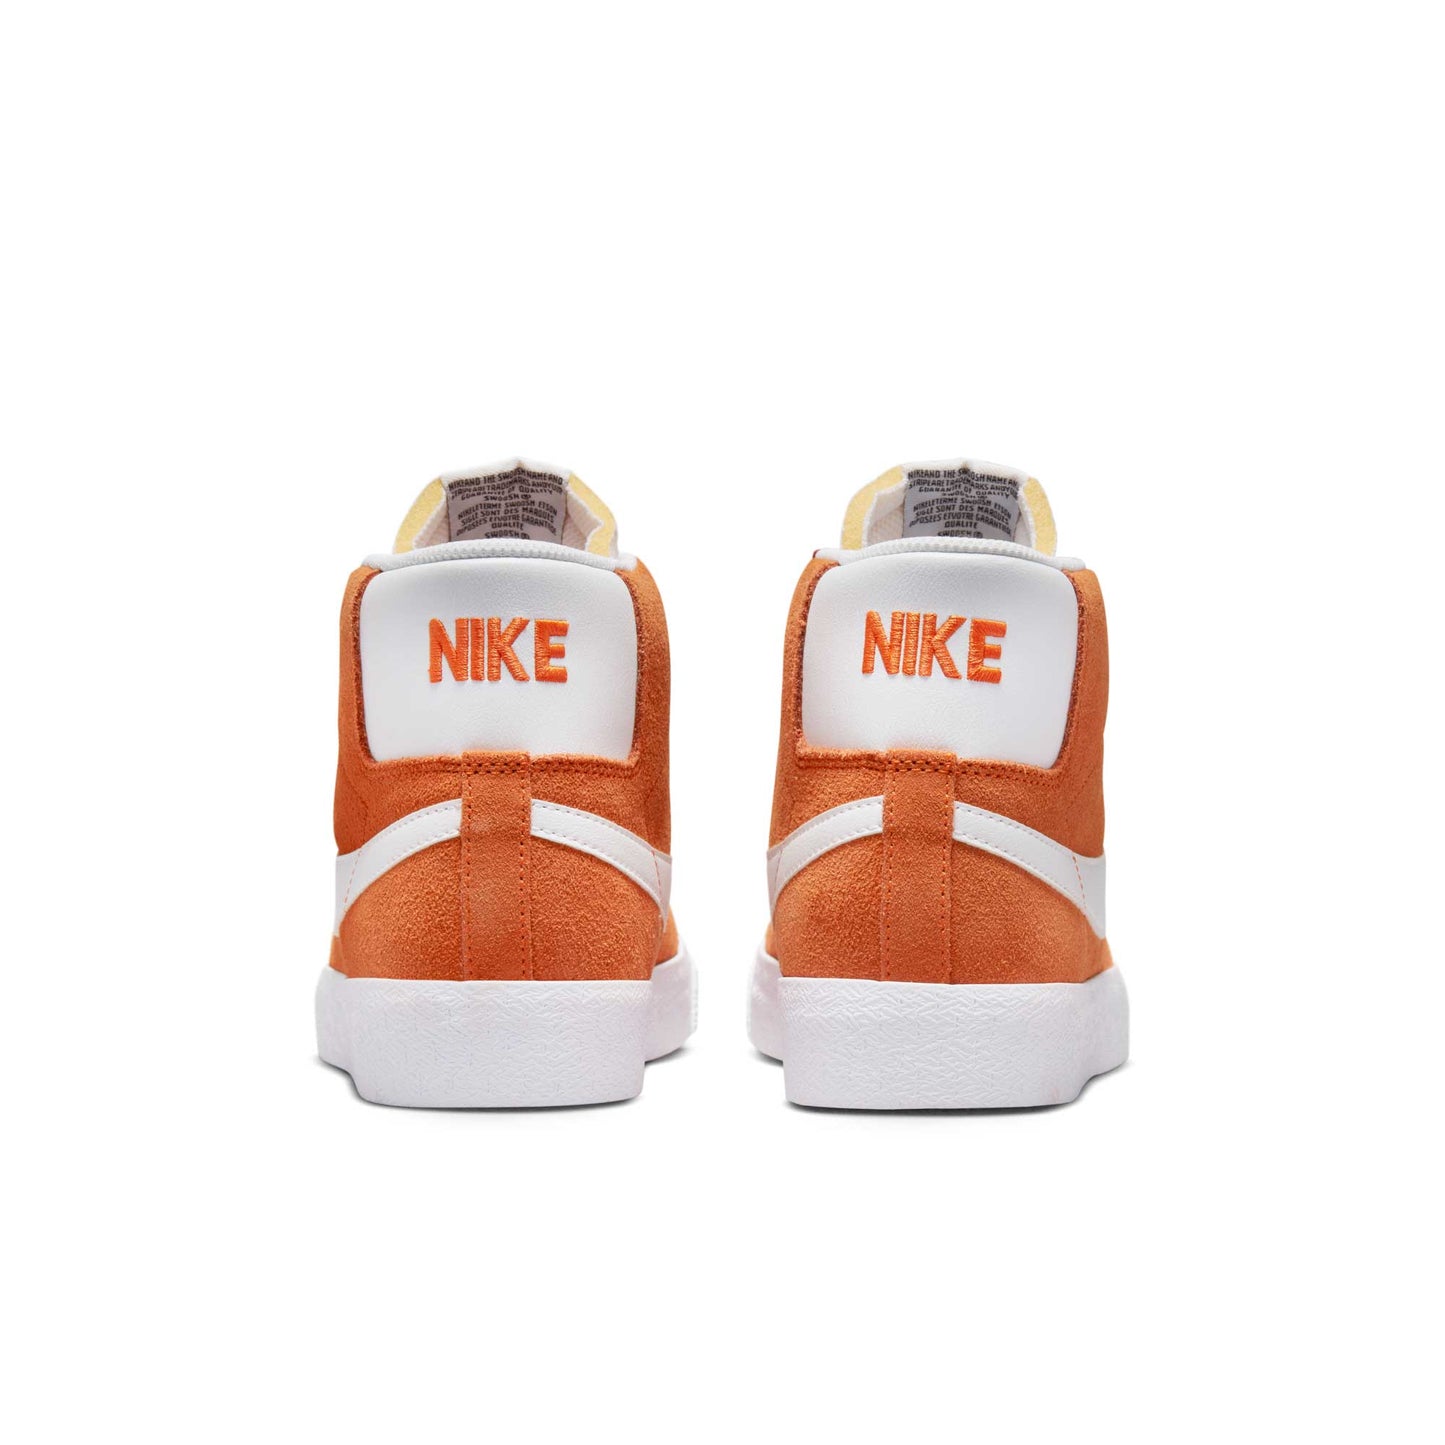 Nike SB Zoom Blazer Mid, safety orange/white-safety orange-white - Tiki Room Skateboards - 3